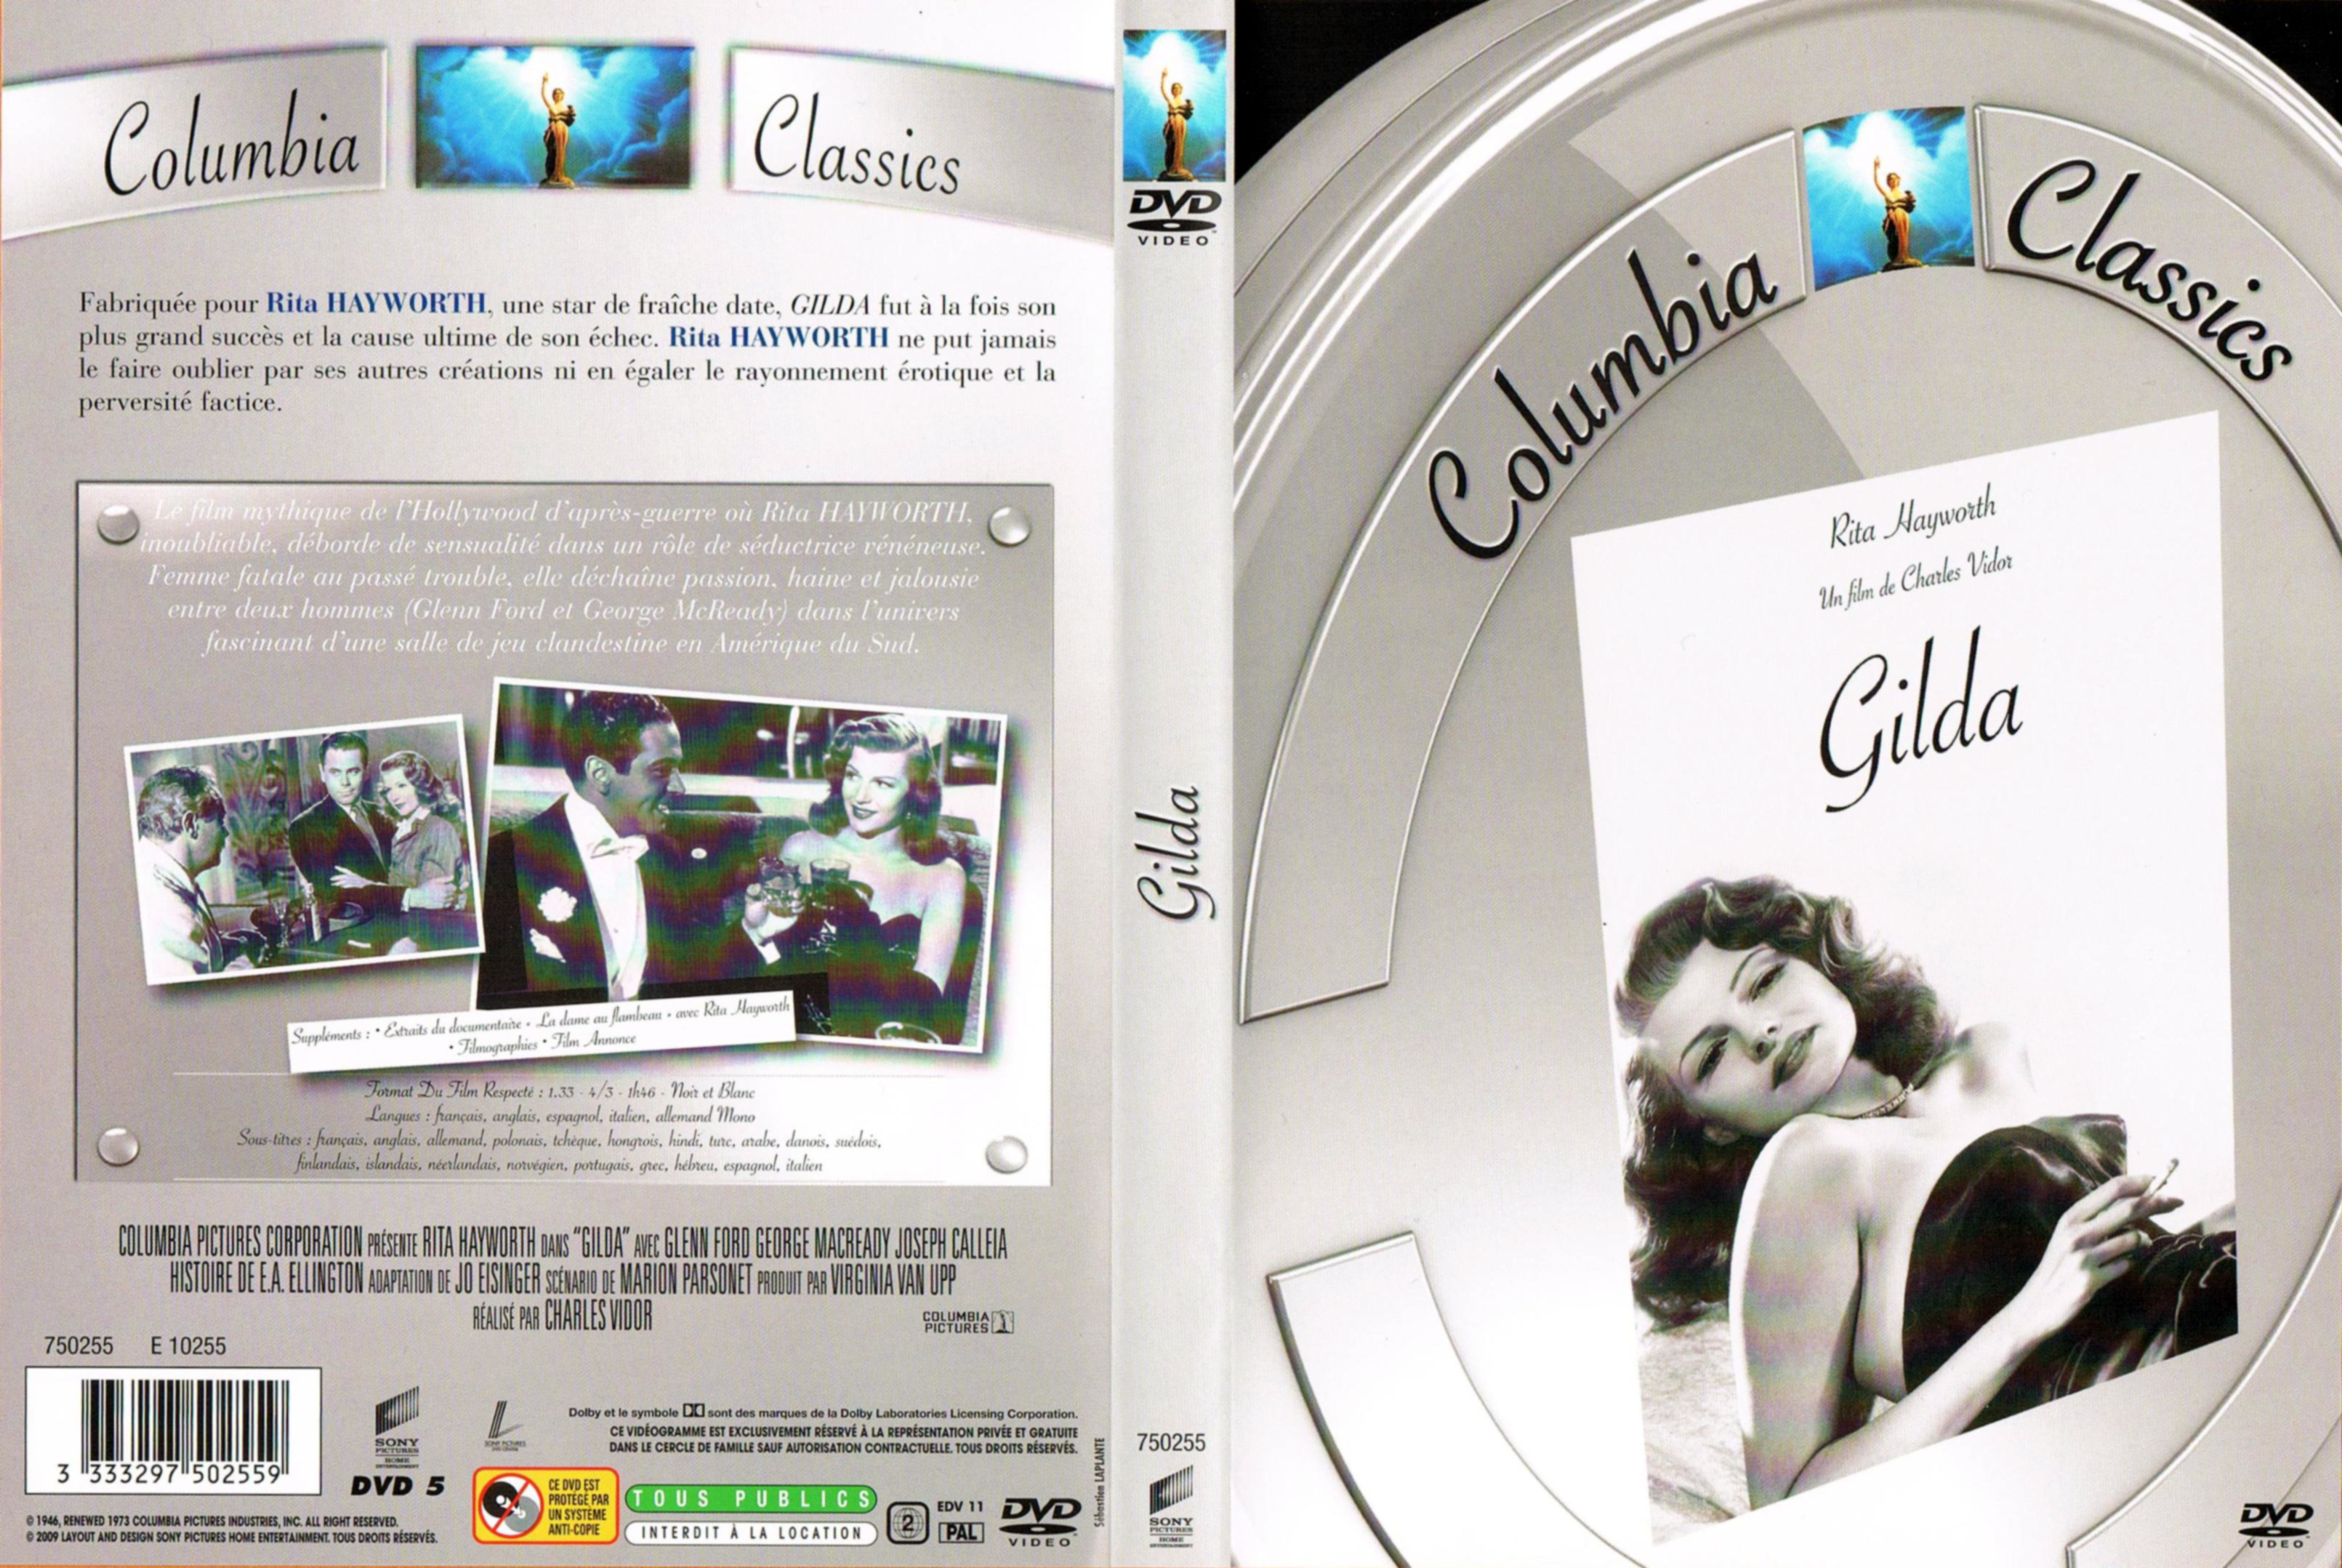 Jaquette DVD Gilda v2